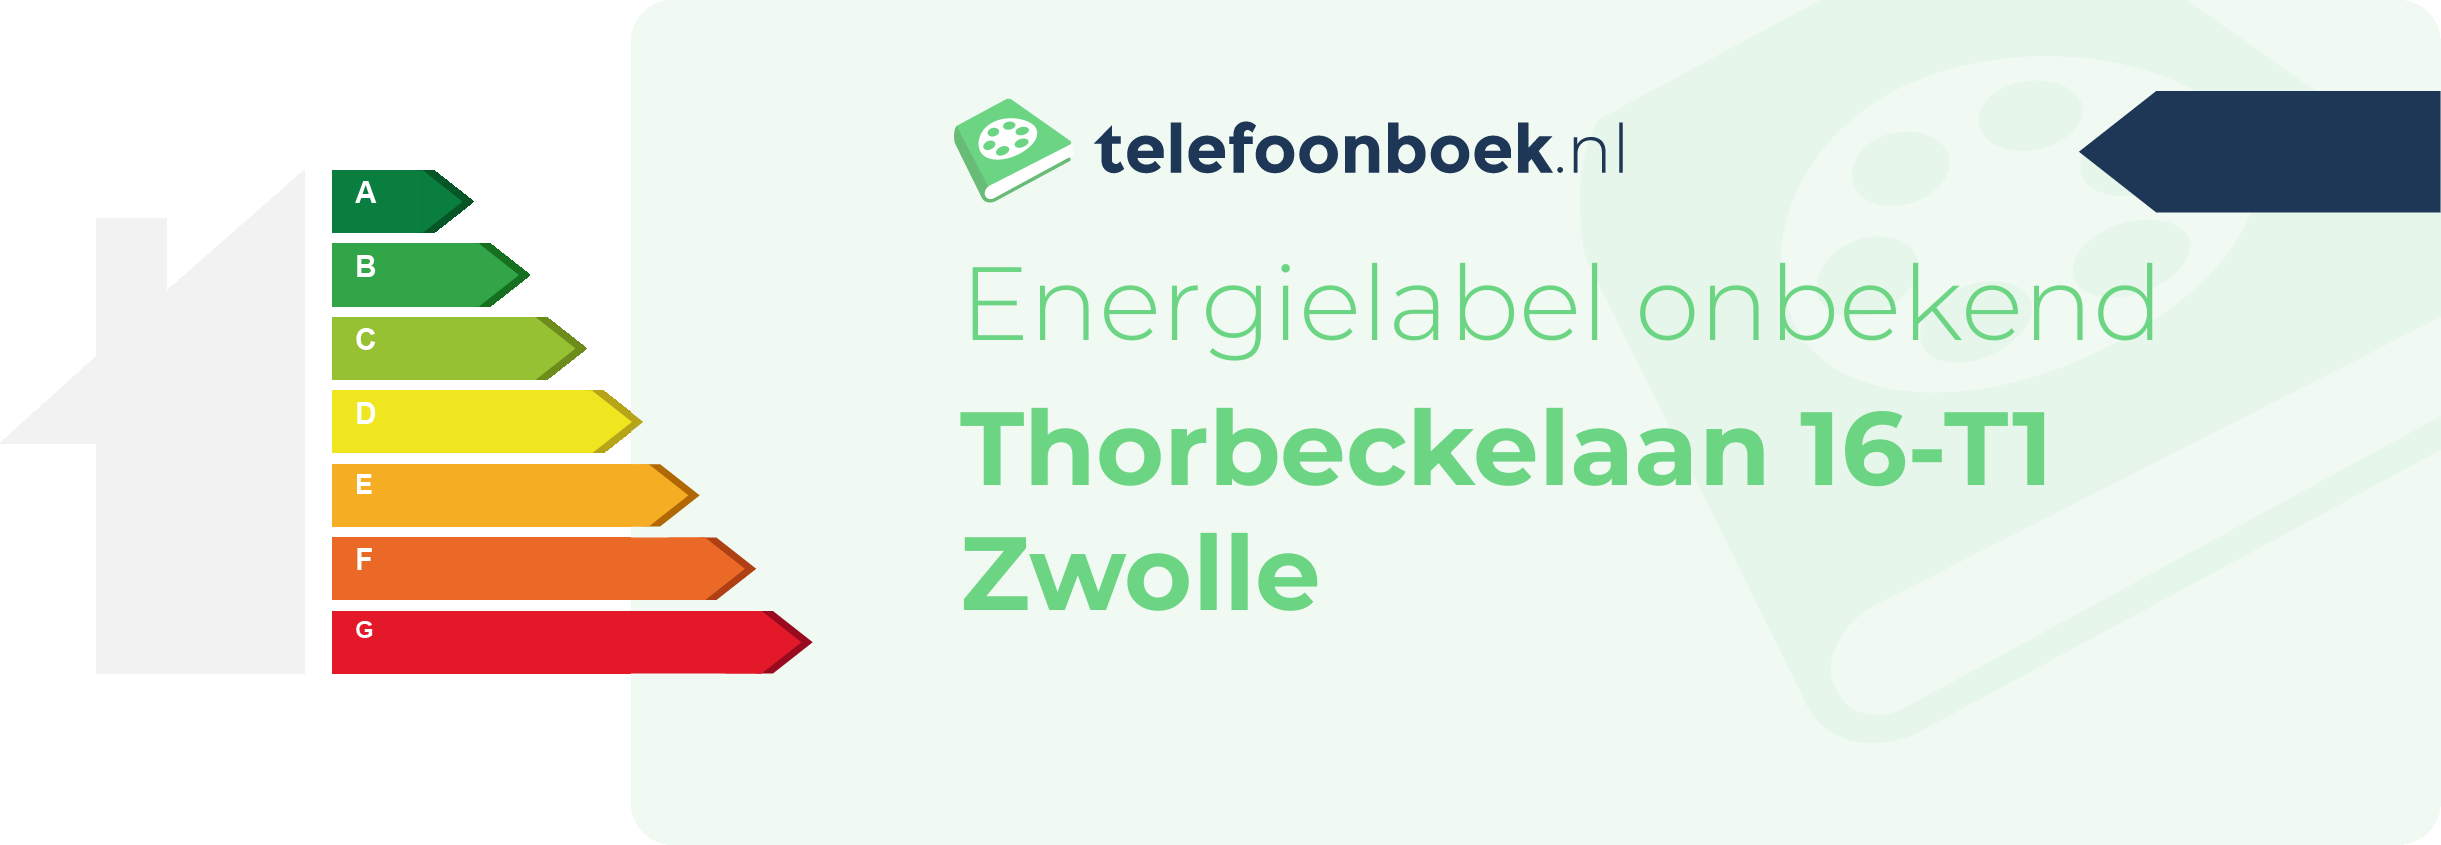 Energielabel Thorbeckelaan 16-T1 Zwolle